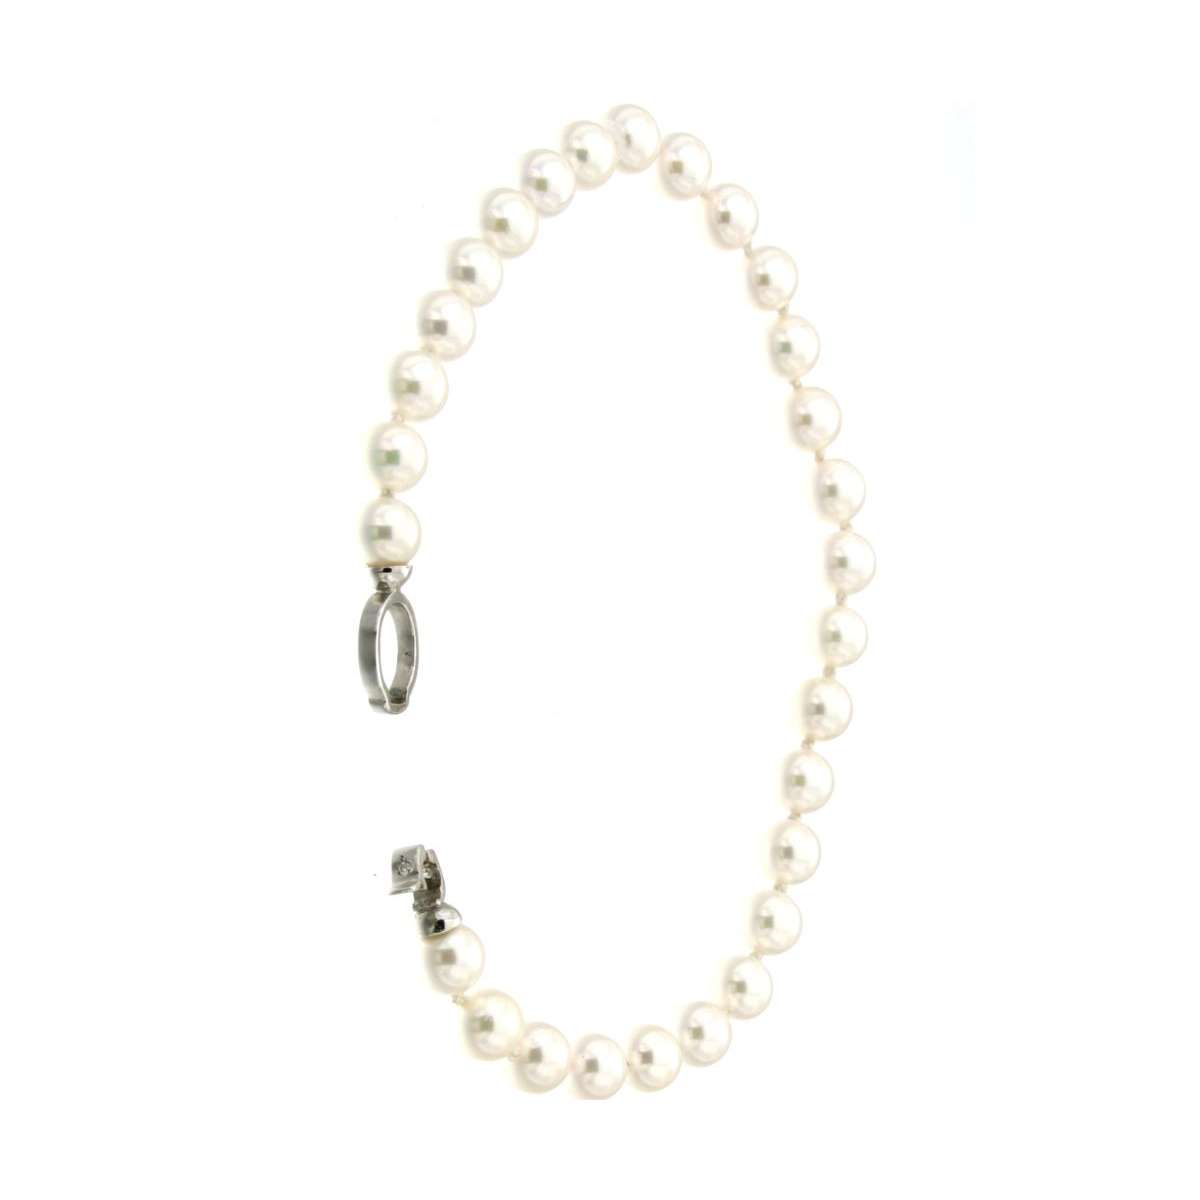 Pearl bracelet 6mm white gold clasp 0.02 carats diamonds G-VS1